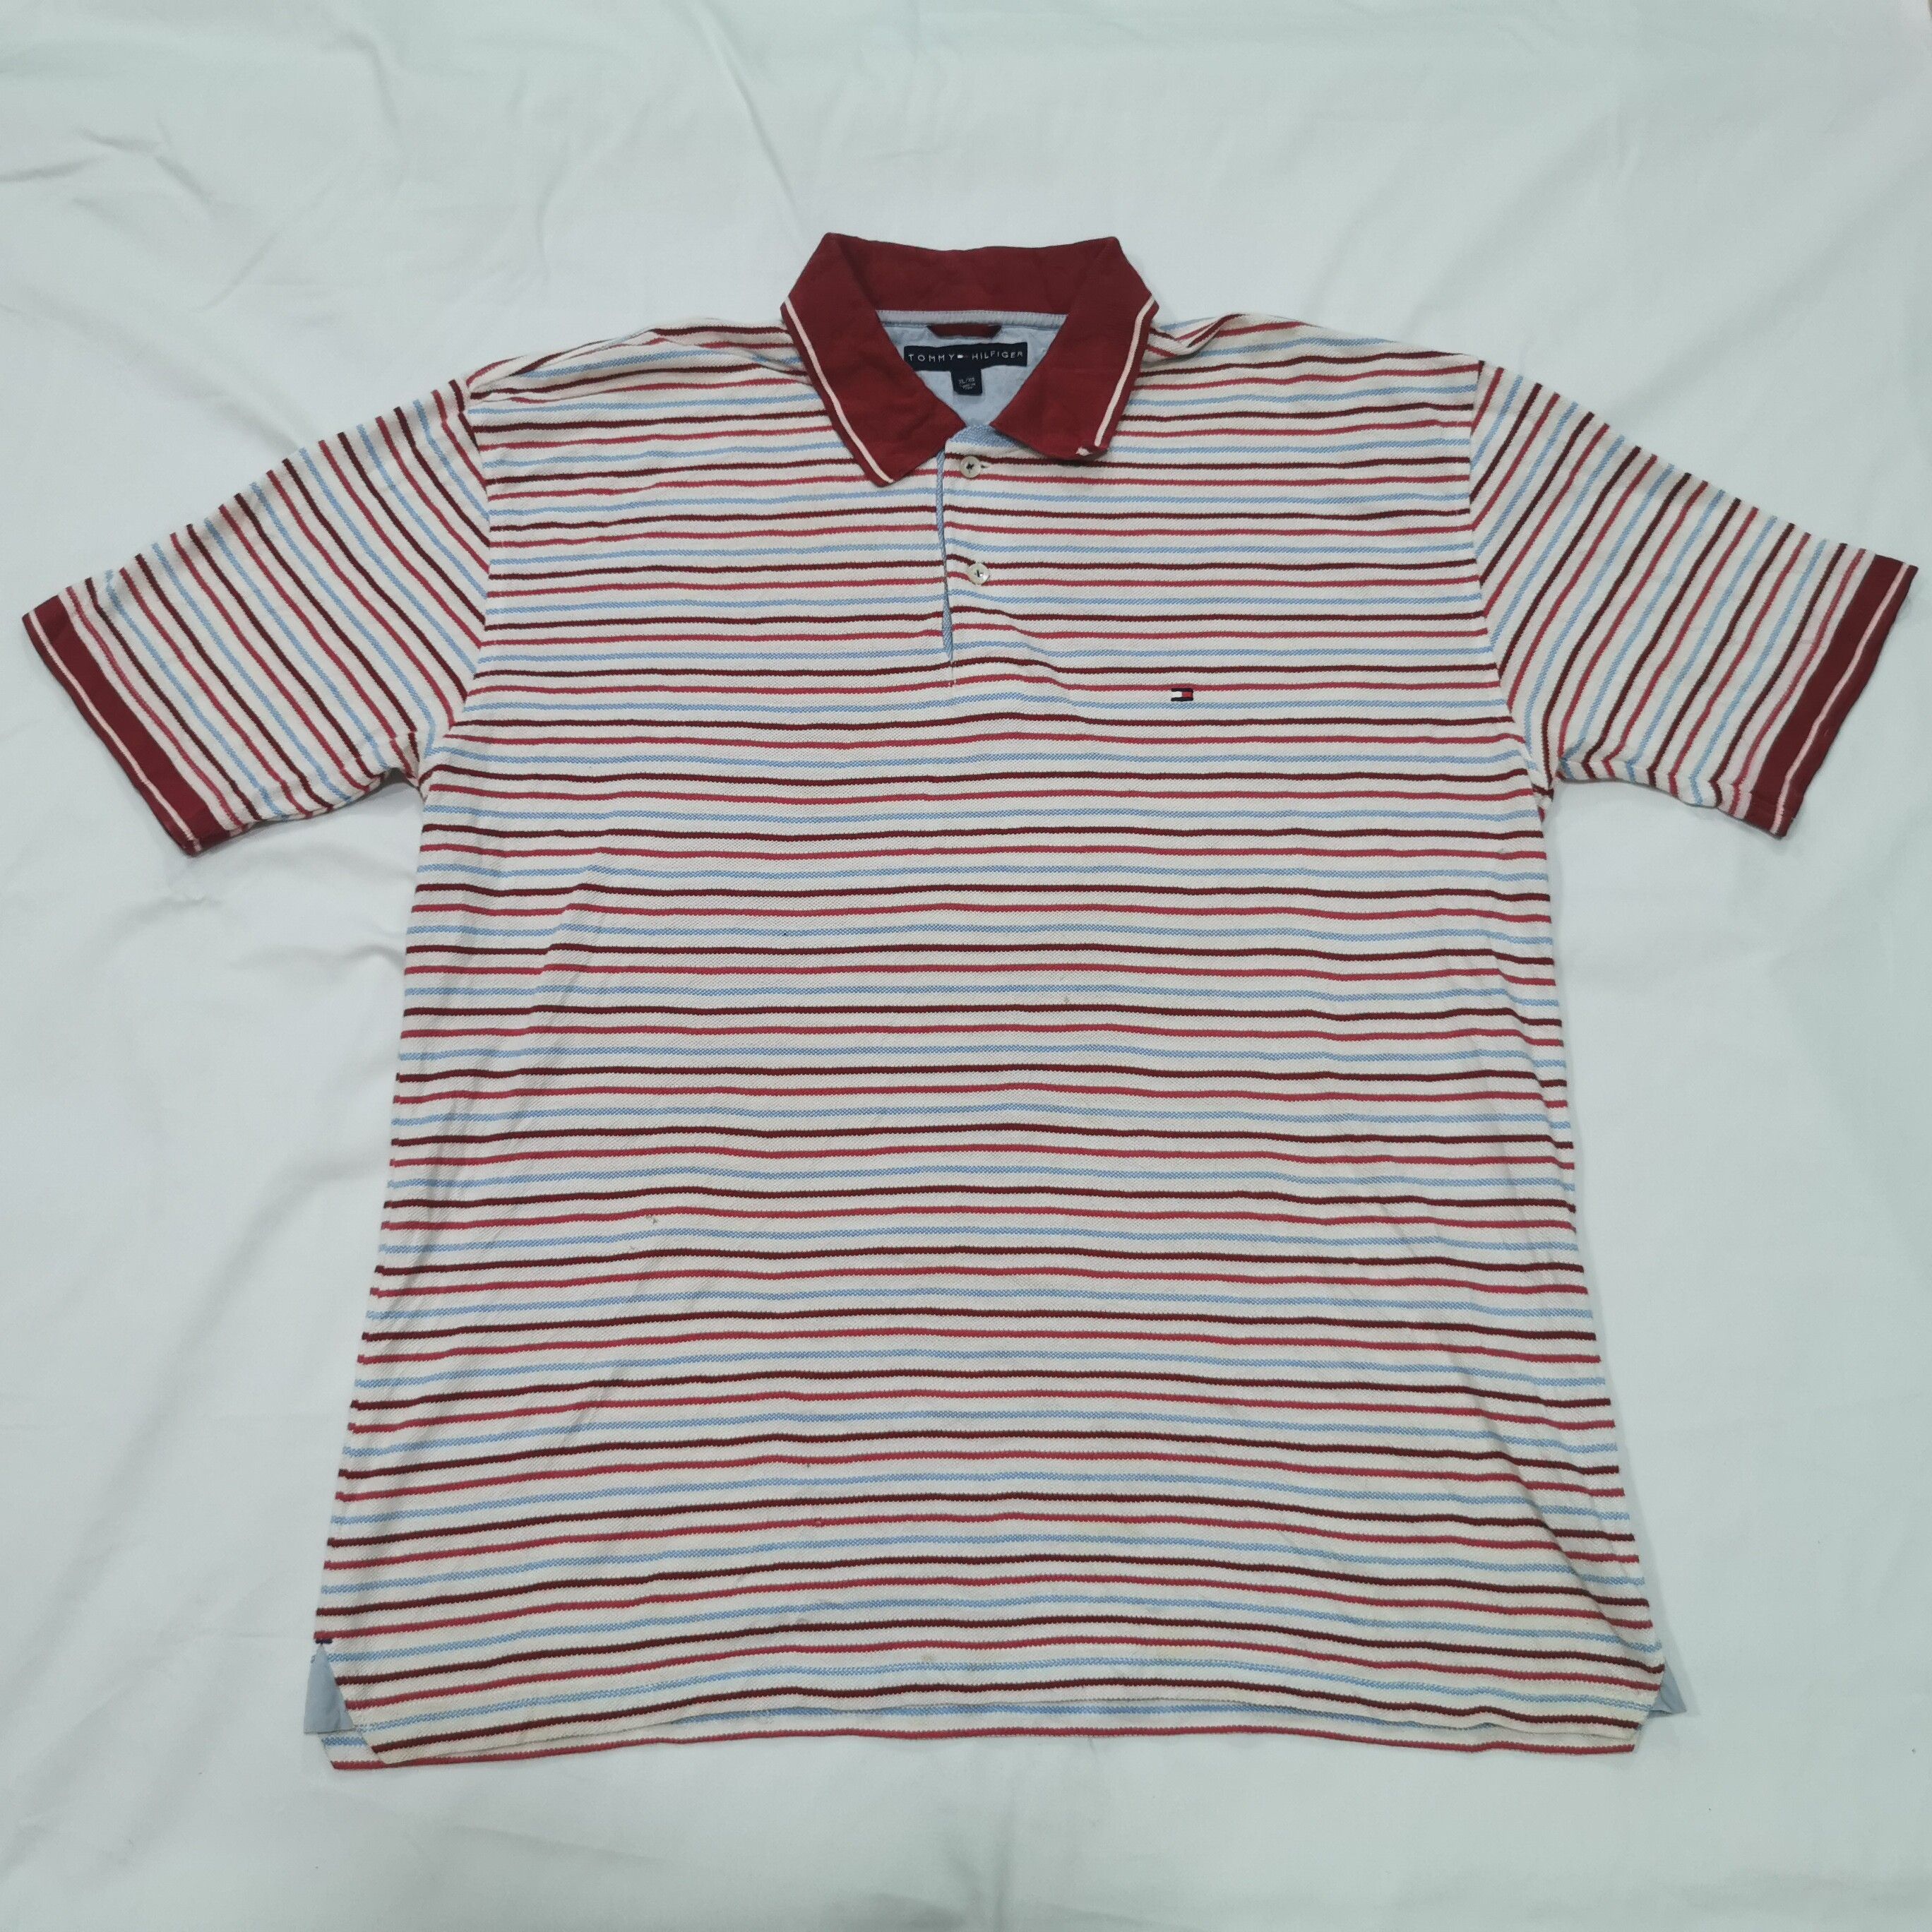 Vintage Tommy Hilfiger Retro Striped Polo Shirt - 1